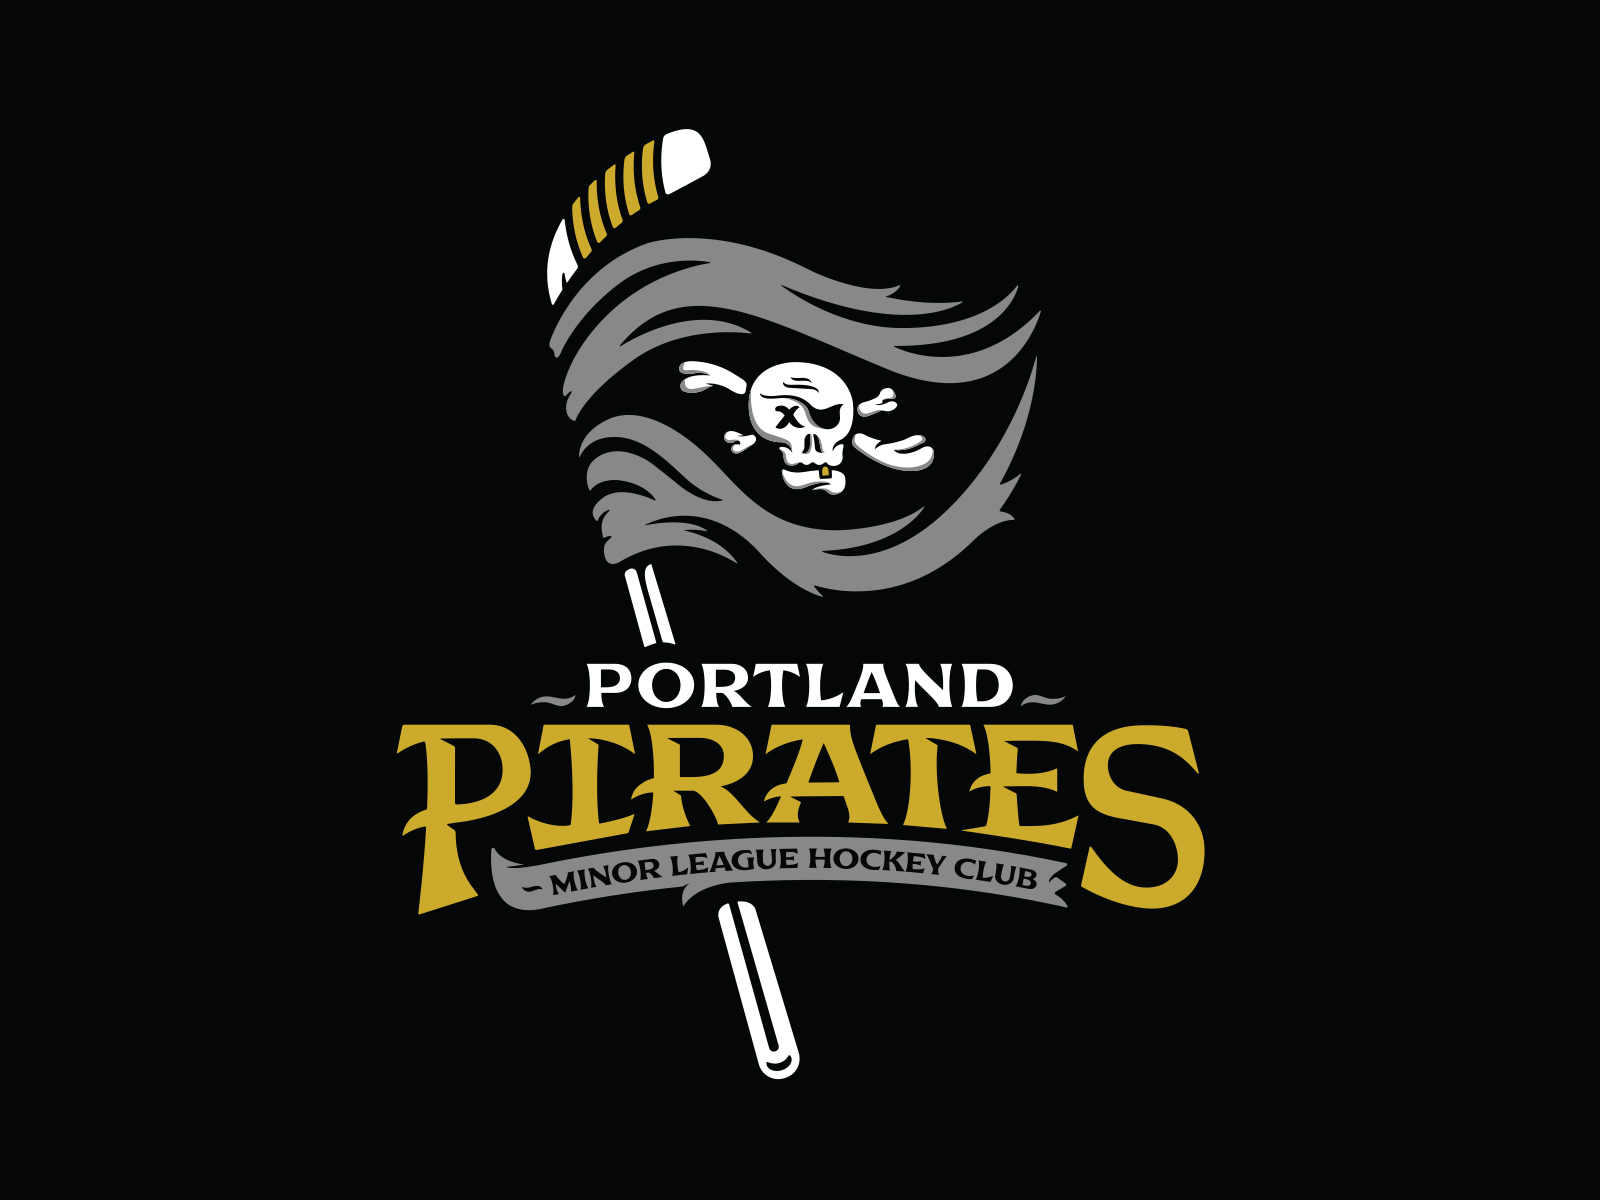 Portland Pirates - Minor League Hockey Club - Logo Suite by Tron